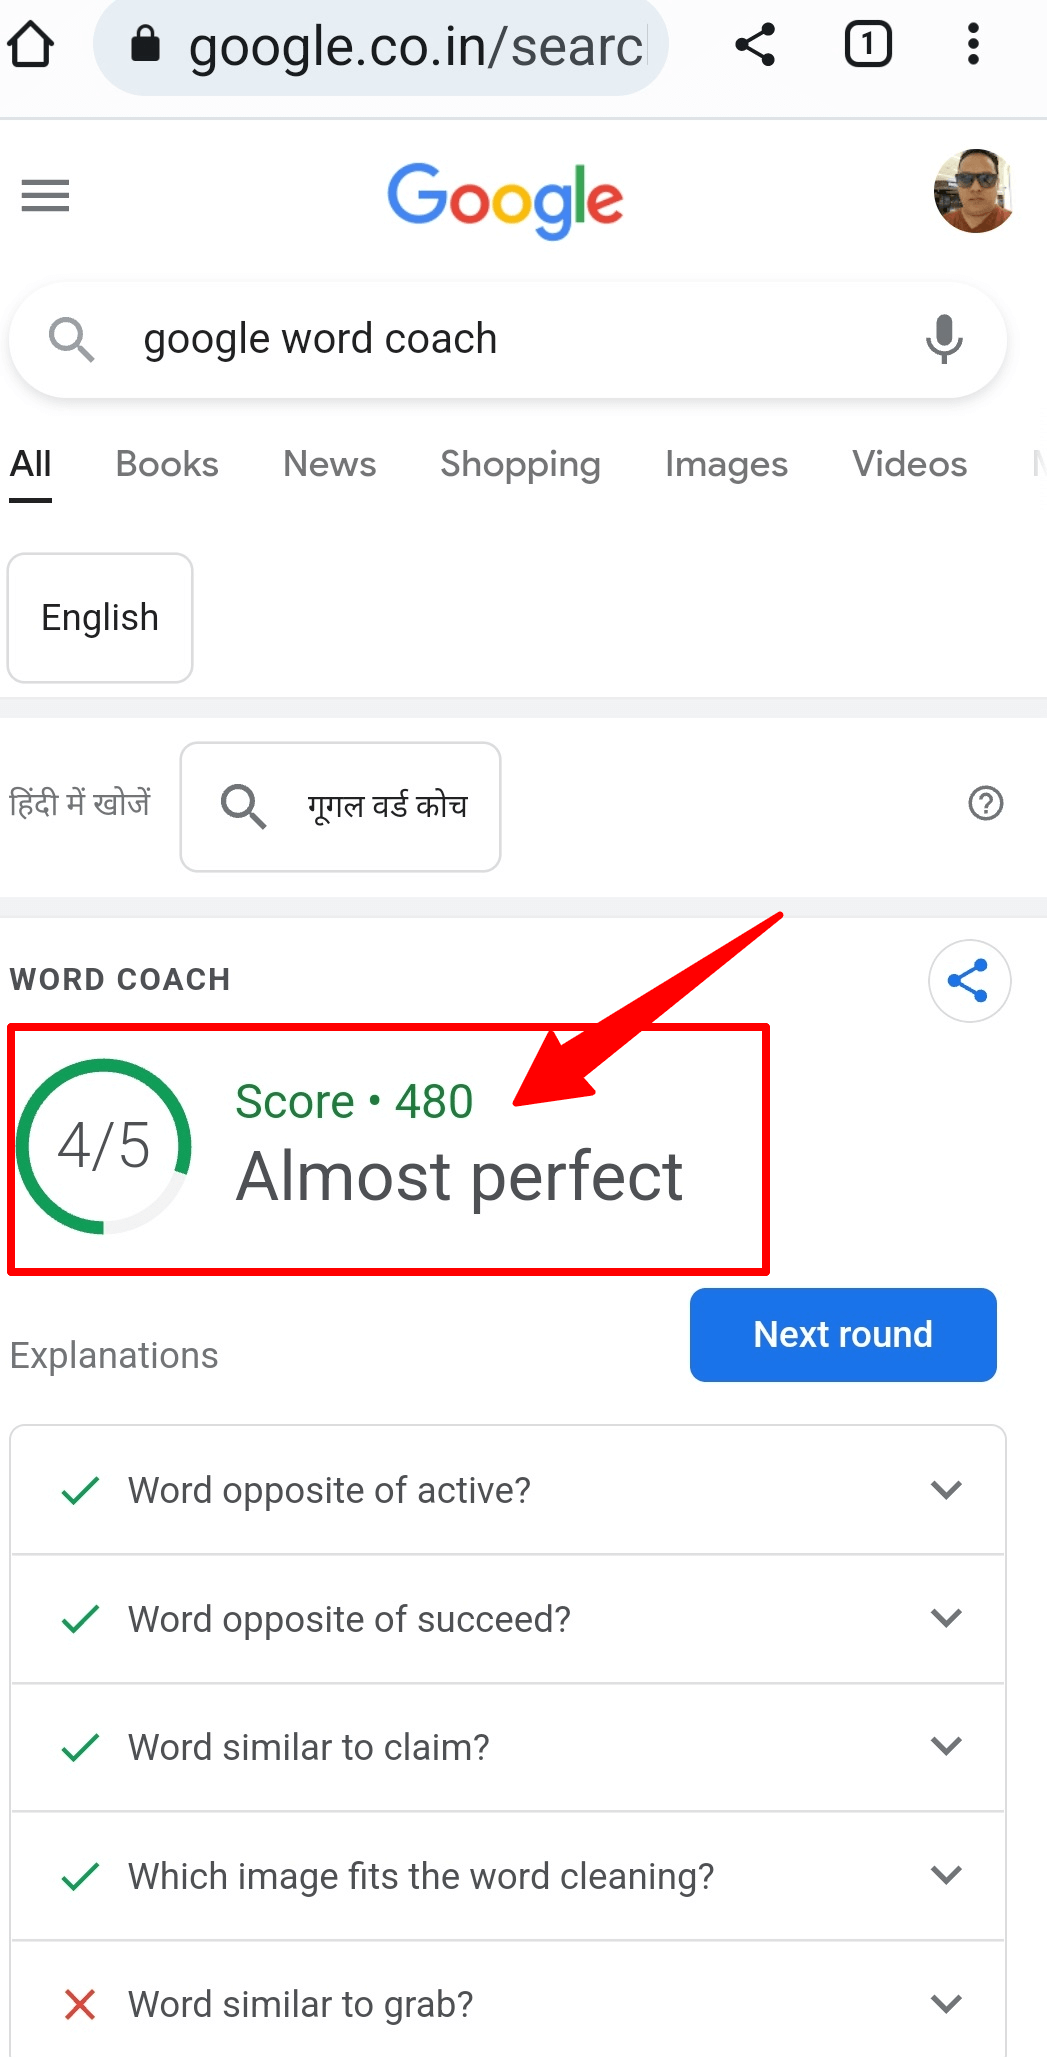 Google word coach score